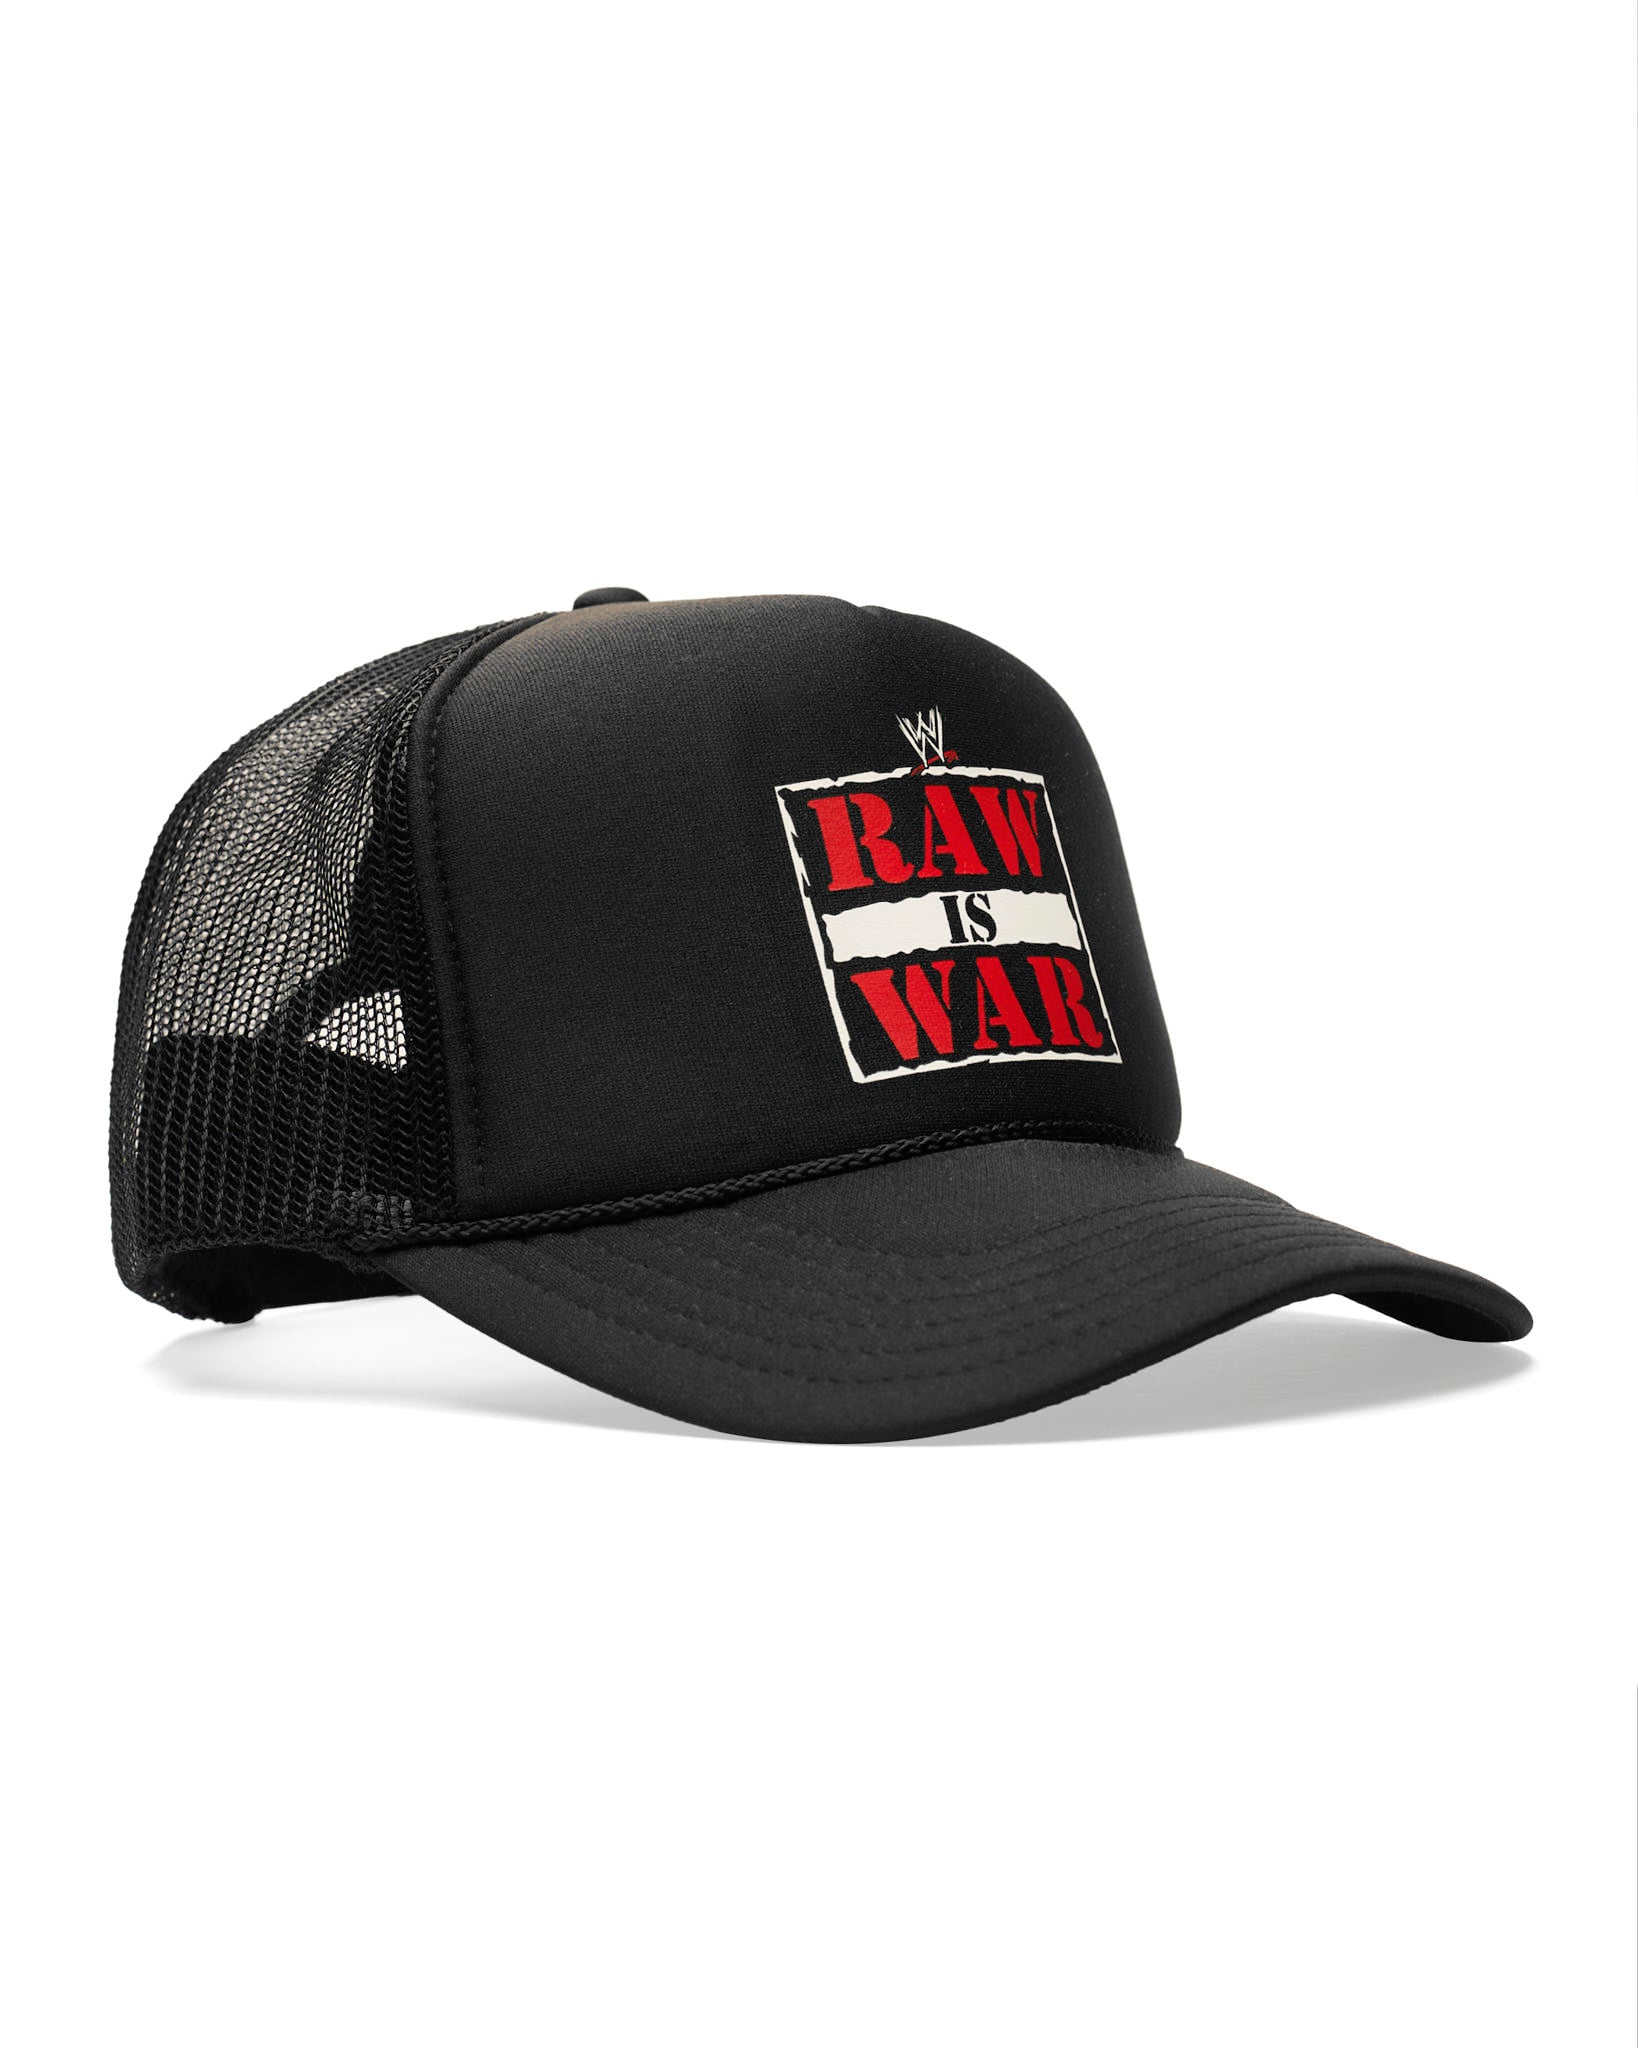 In The Raw® Men's Cap